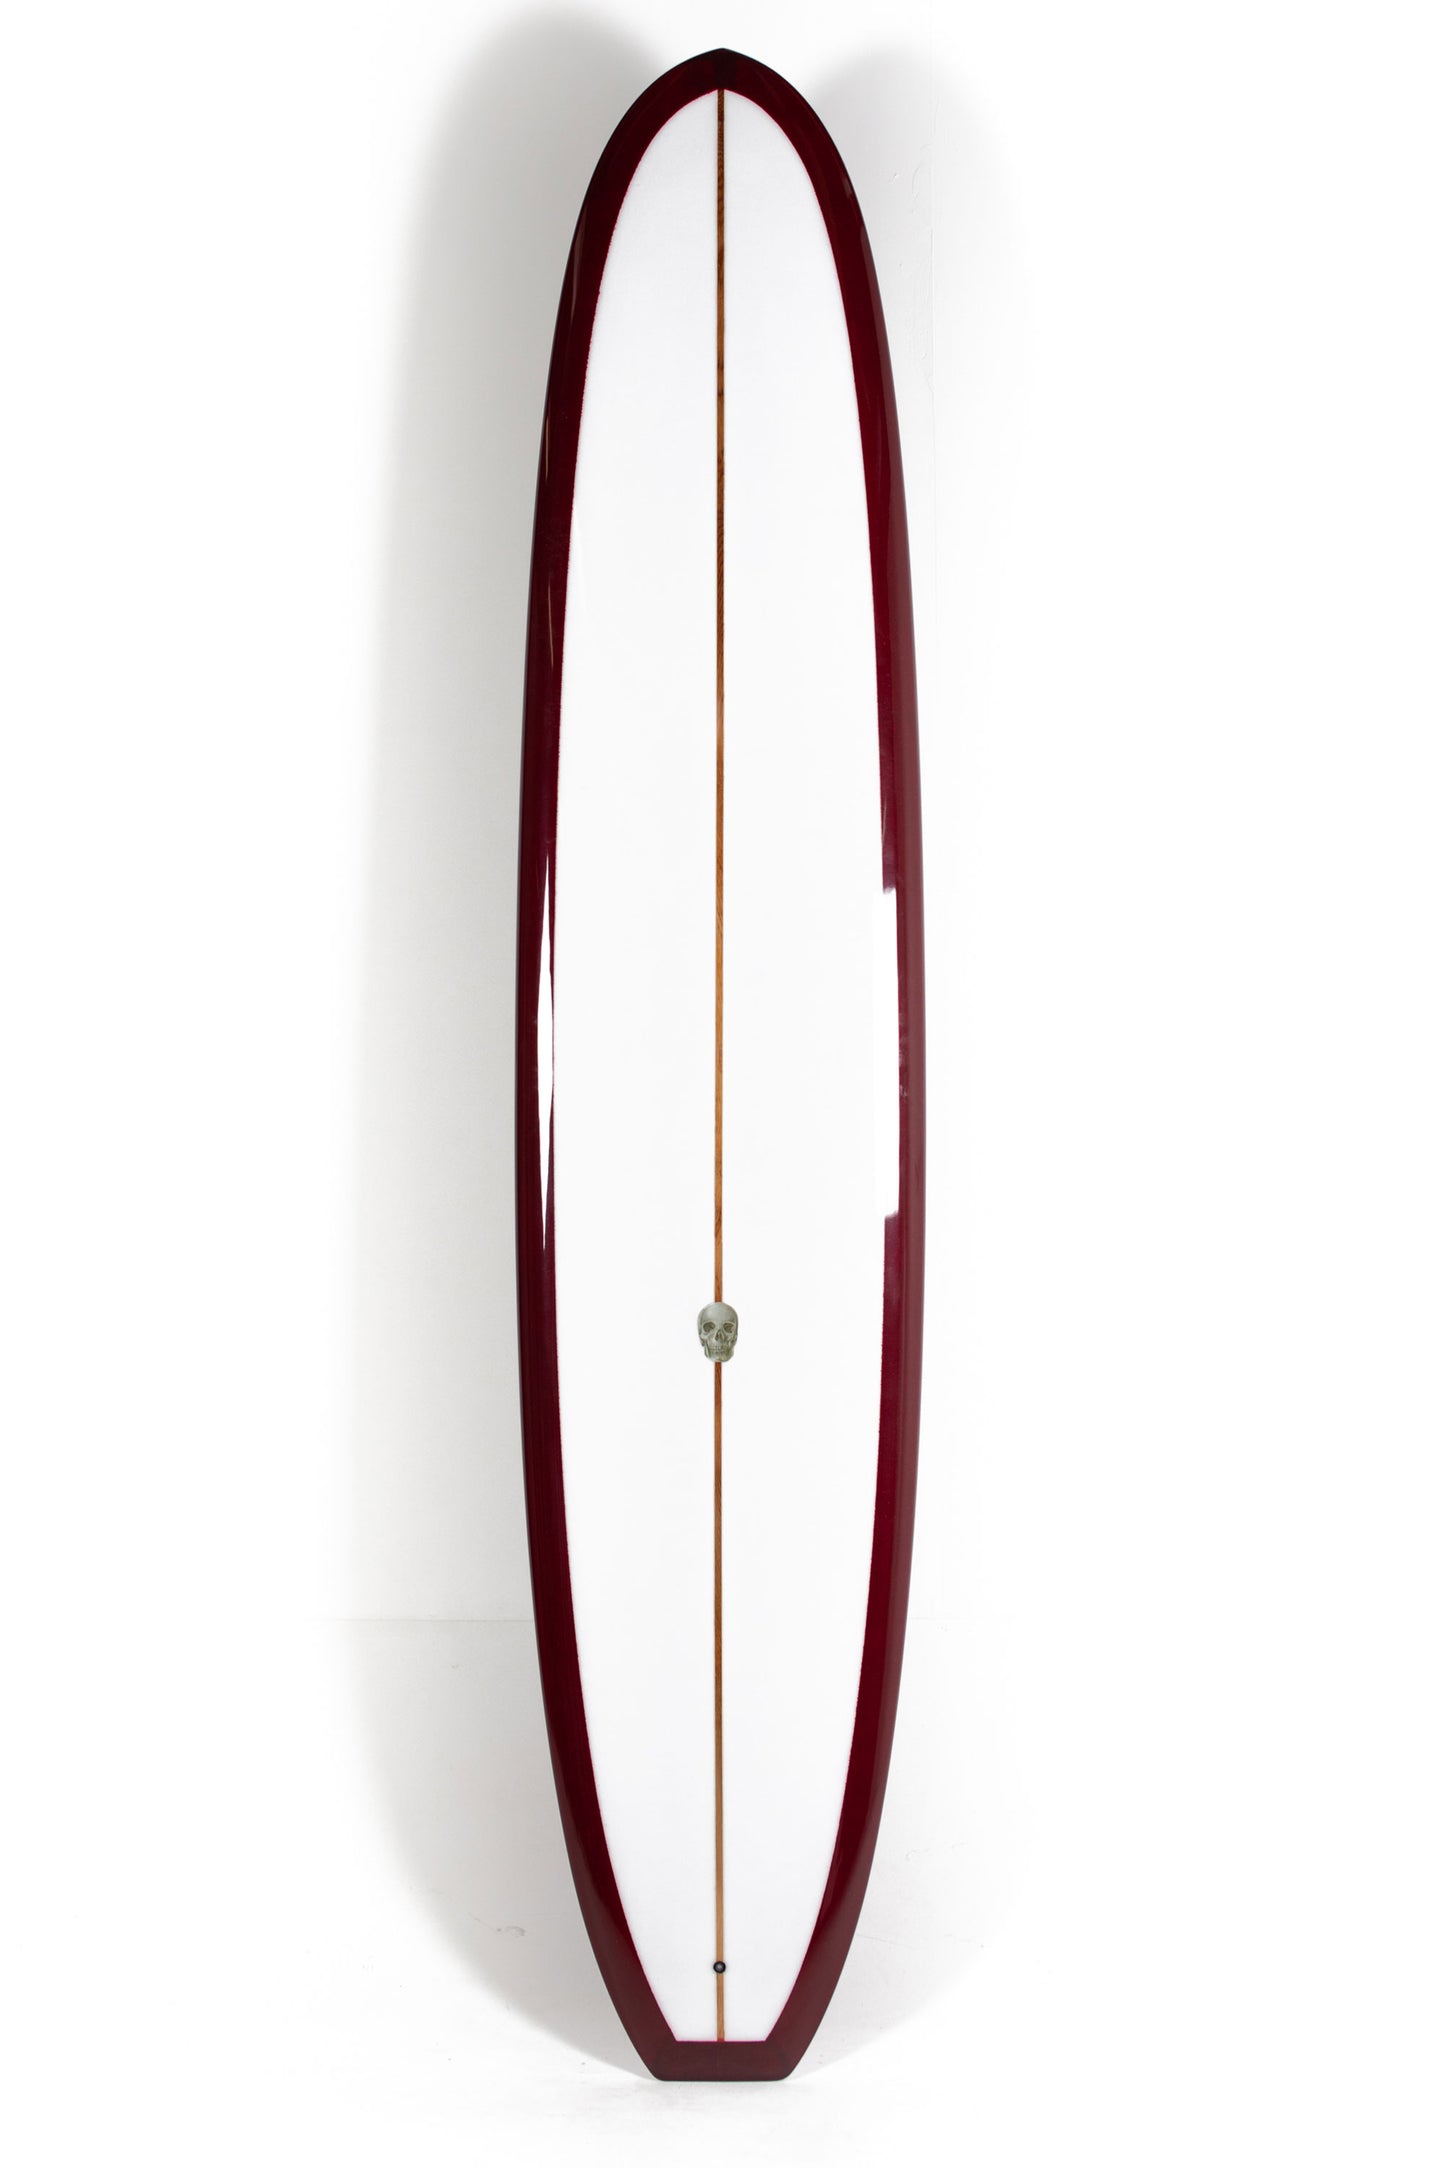 Pukas Surf Shop - Christenson Surfboard  - SCARLET BEGONIA by Chris Christenson - 9'7” x 23 3/8" x 2 15/16" - CX05368